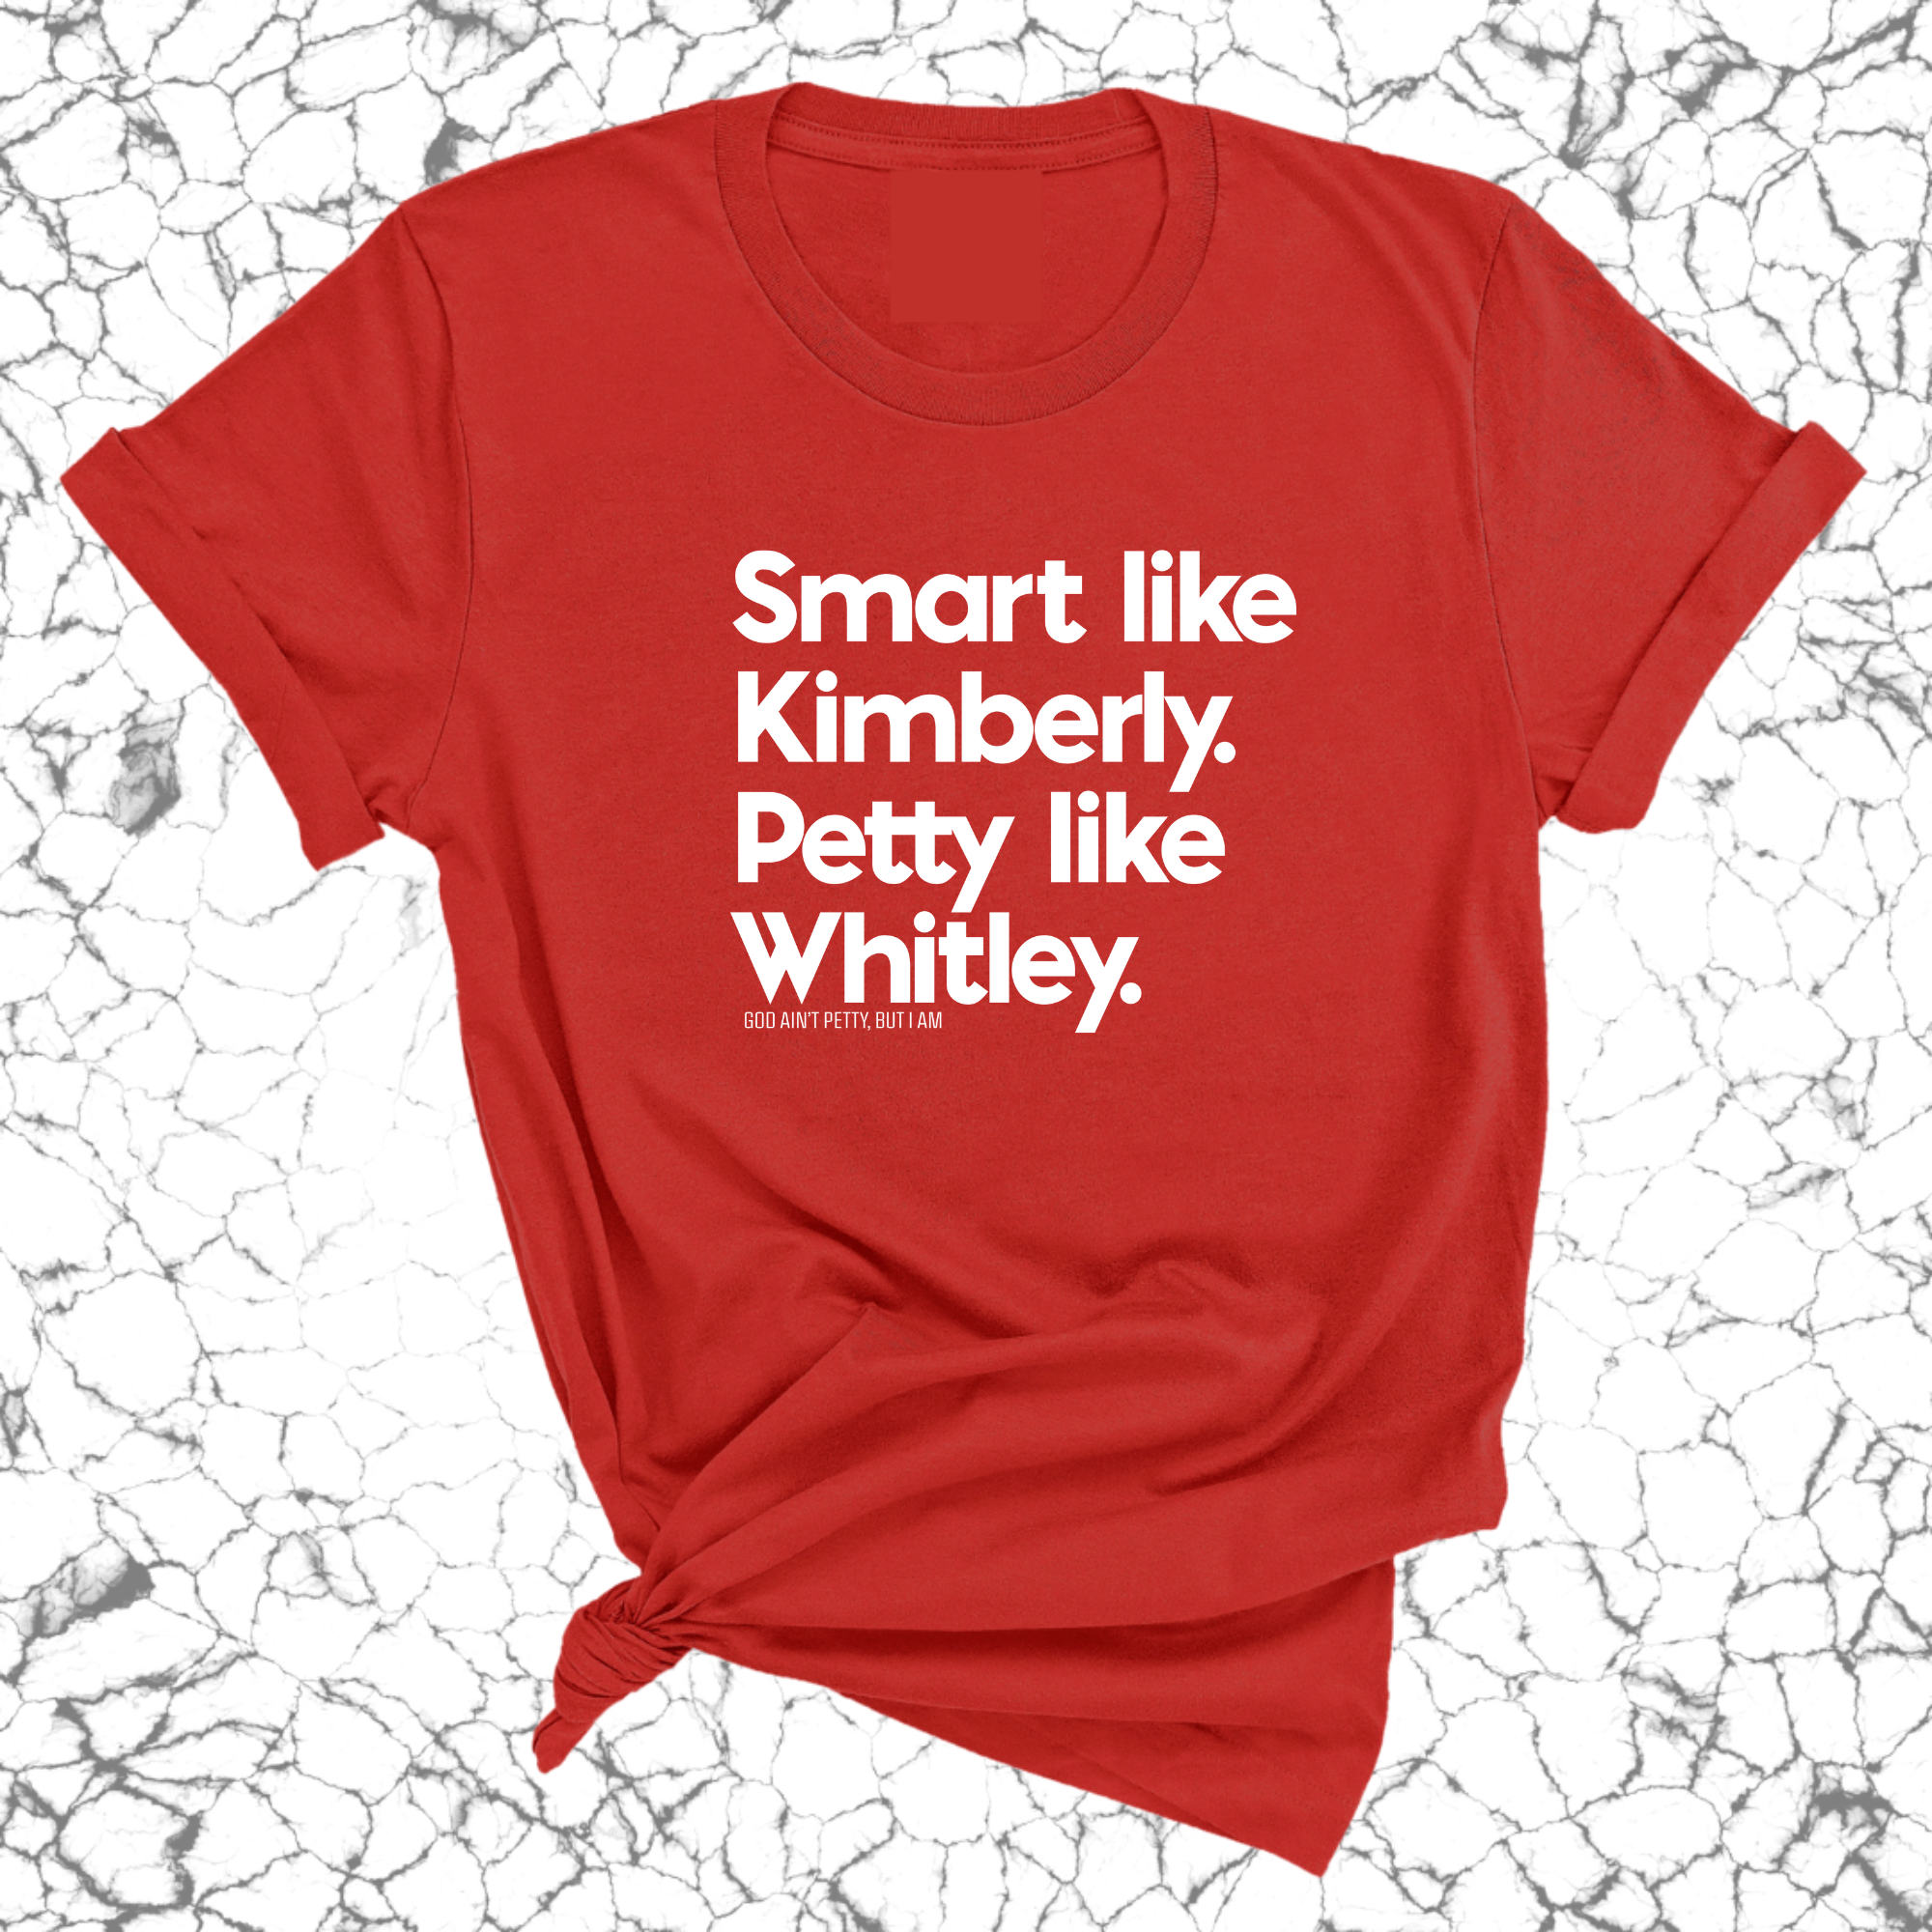 Smart like Kimberly. Petty like Whitley Unisex Tee-T-Shirt-The Original God Ain't Petty But I Am